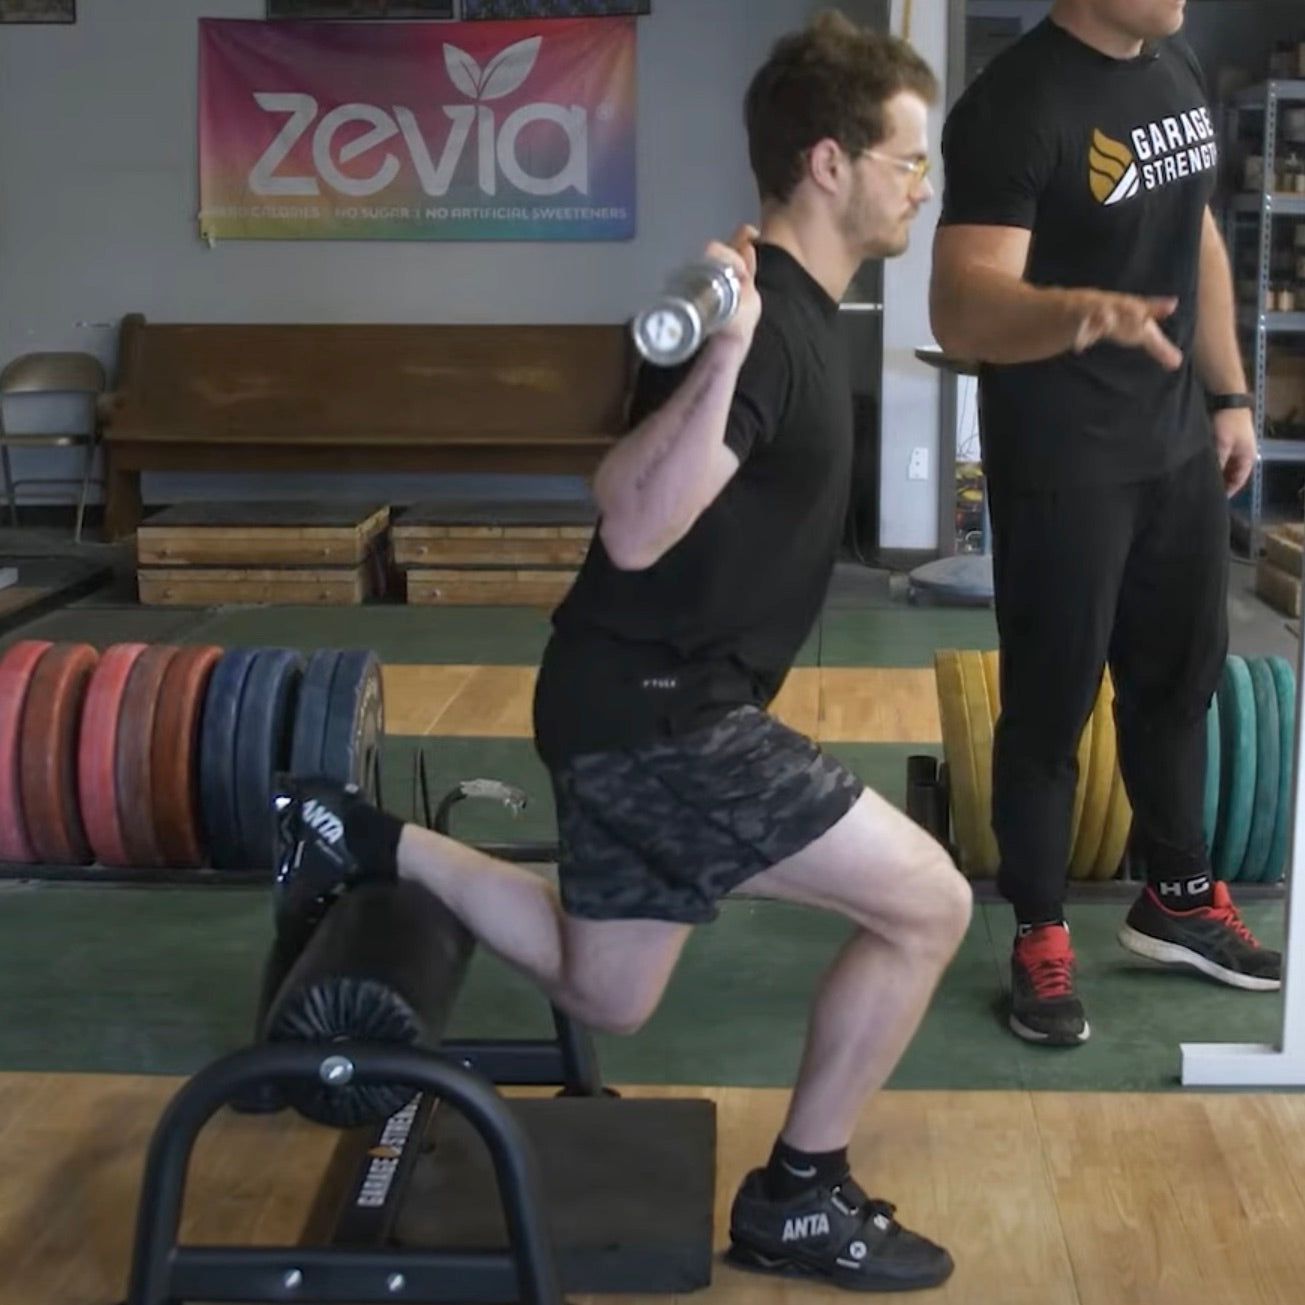 Single Leg Squat Stand – Garage Strength